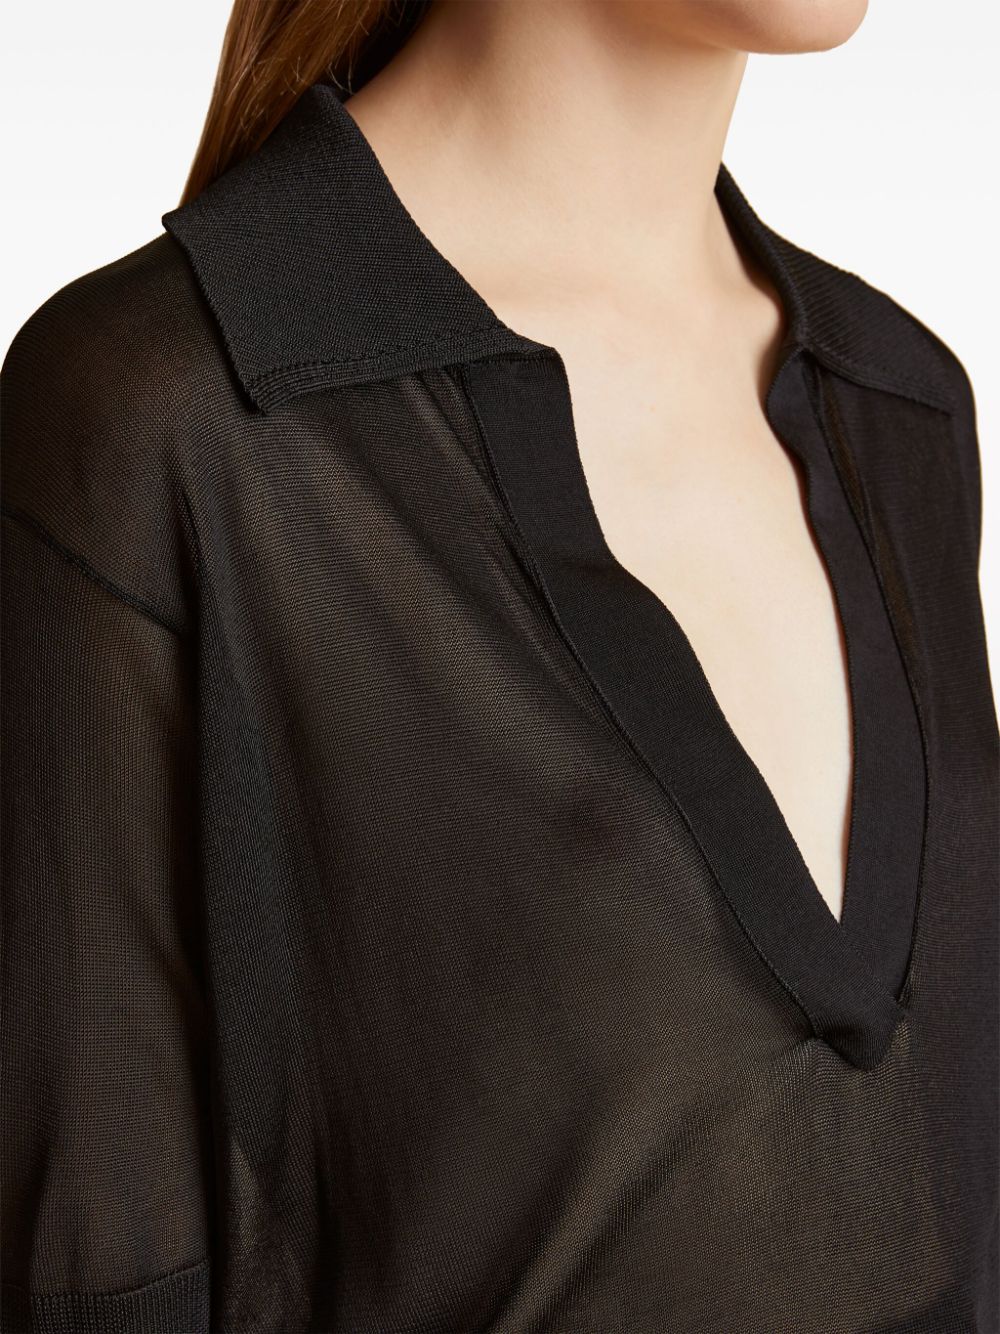 KHAITE Elegant Black Viscose Top with Short Sleeves